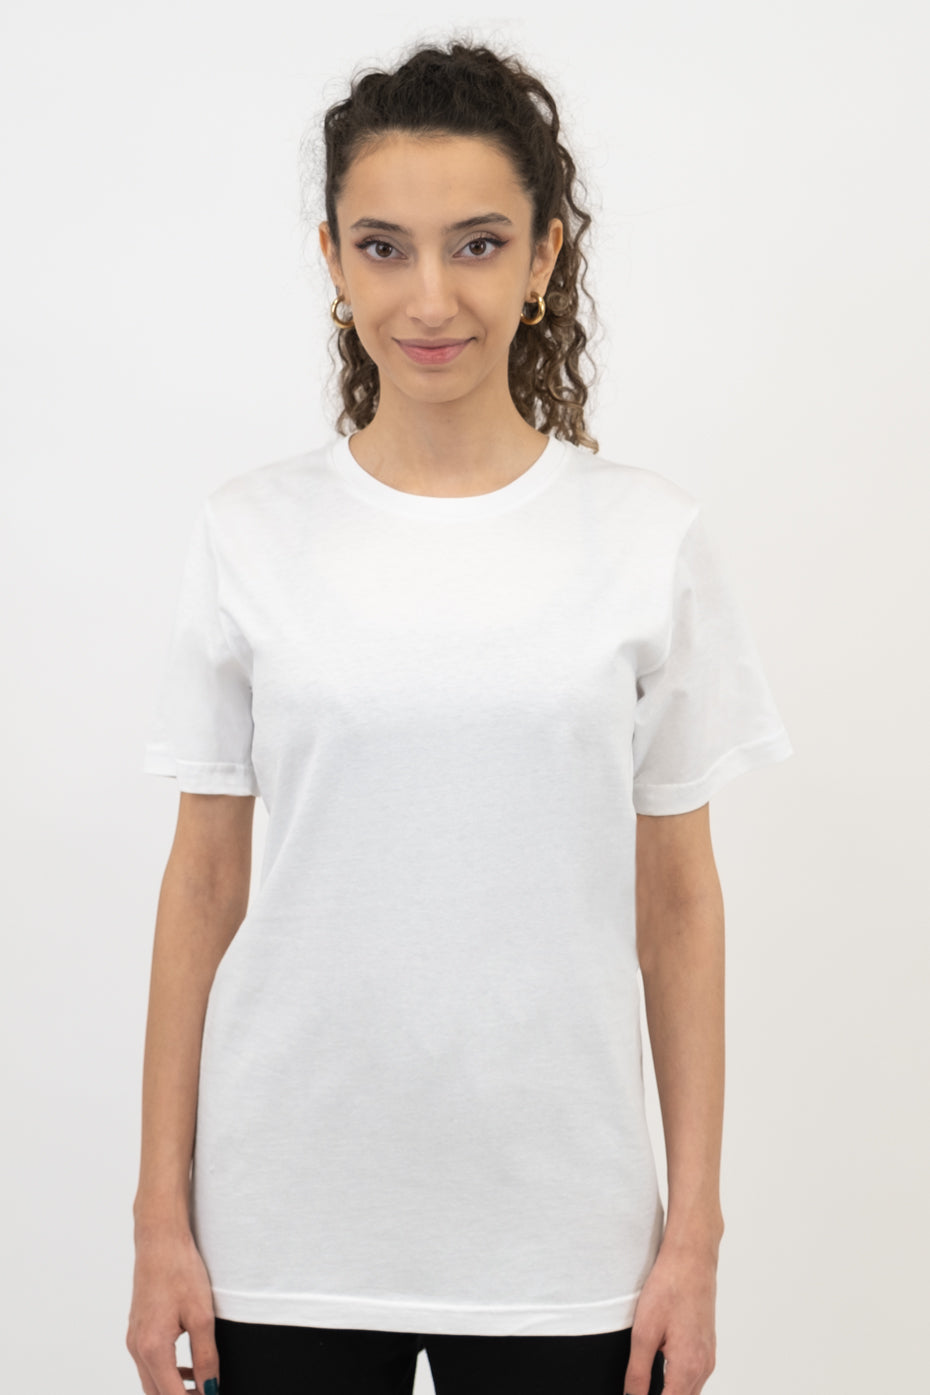 Wholesale Women Sublimation Blank T-Shirt Basic White Polyester Shirts  Sublimation Short Sleeve T-Shirt Manufacturer and Supplier